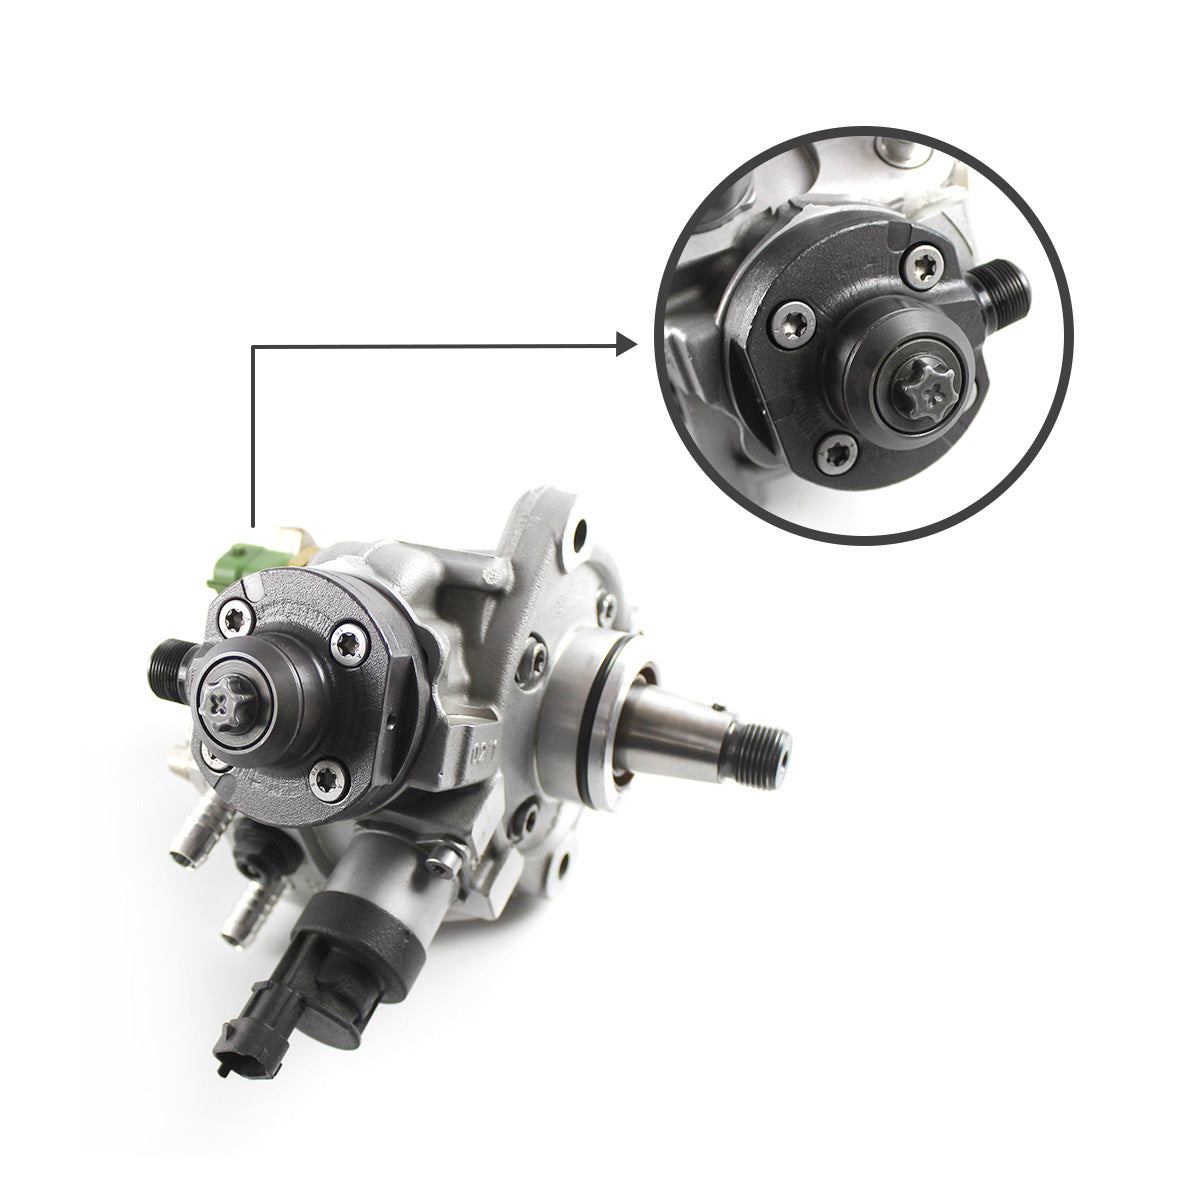 0445020509 129A00-51000 Fuel Injection Pump for Bosch Yanmar Engine - Sinocmp